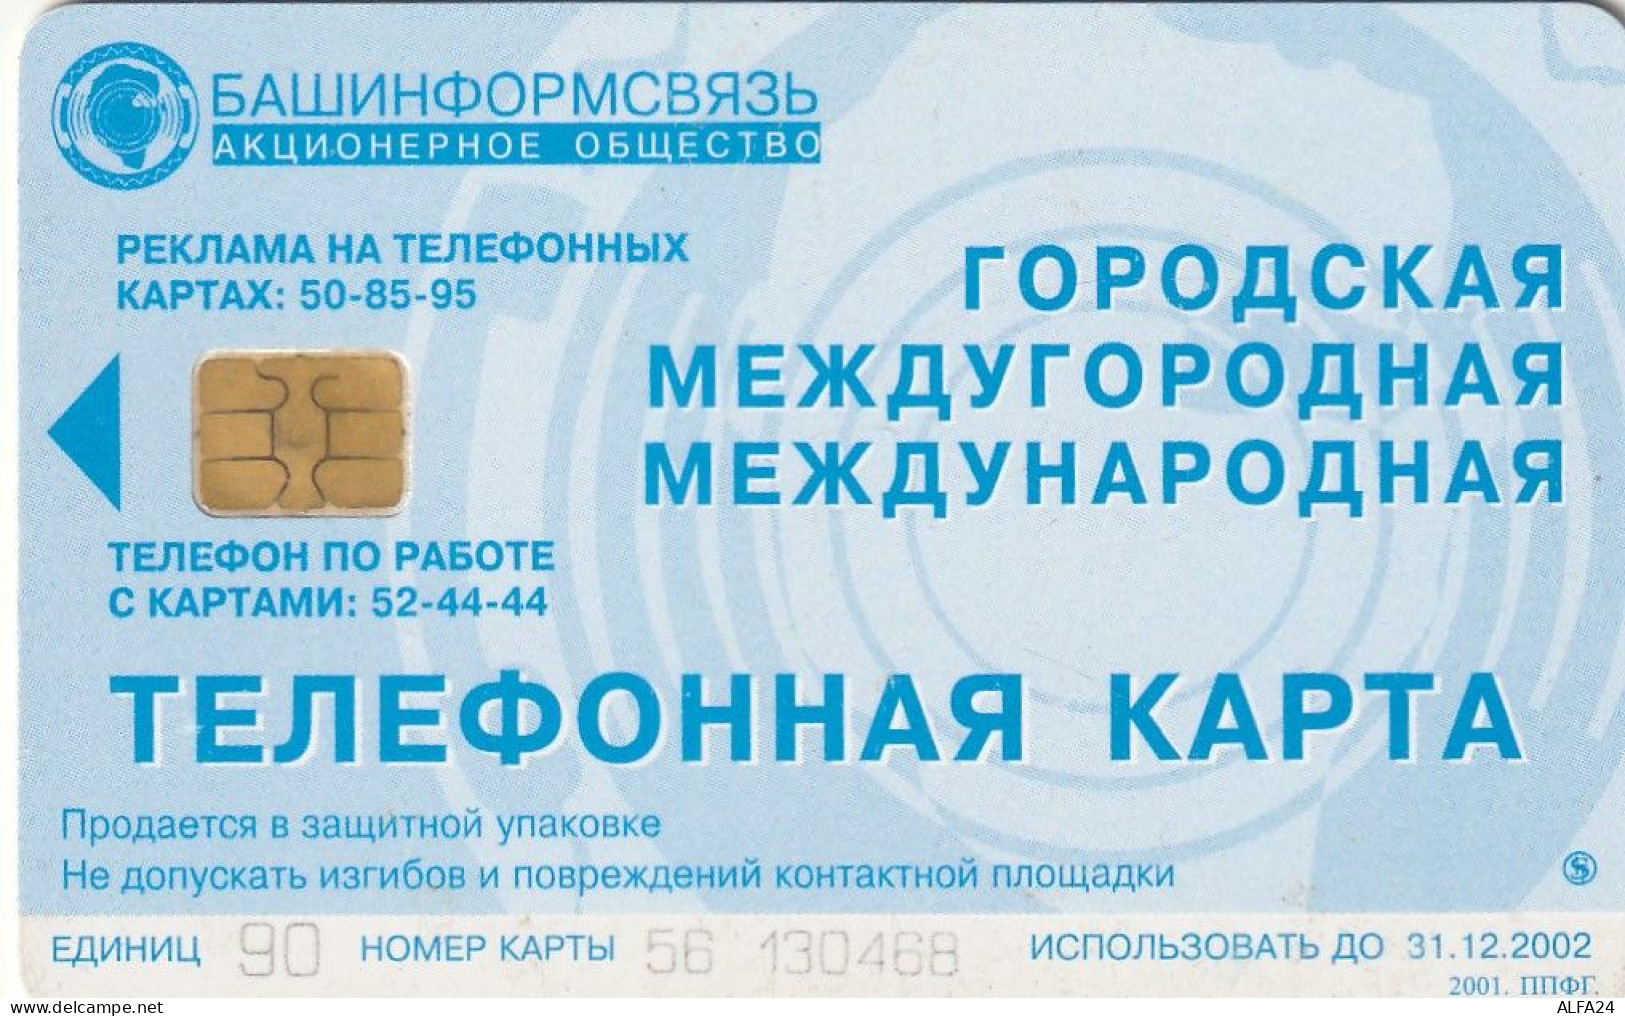 PHONE CARD RUSSIA Bashinformsvyaz - Ufa (E9.2.6 - Rusland